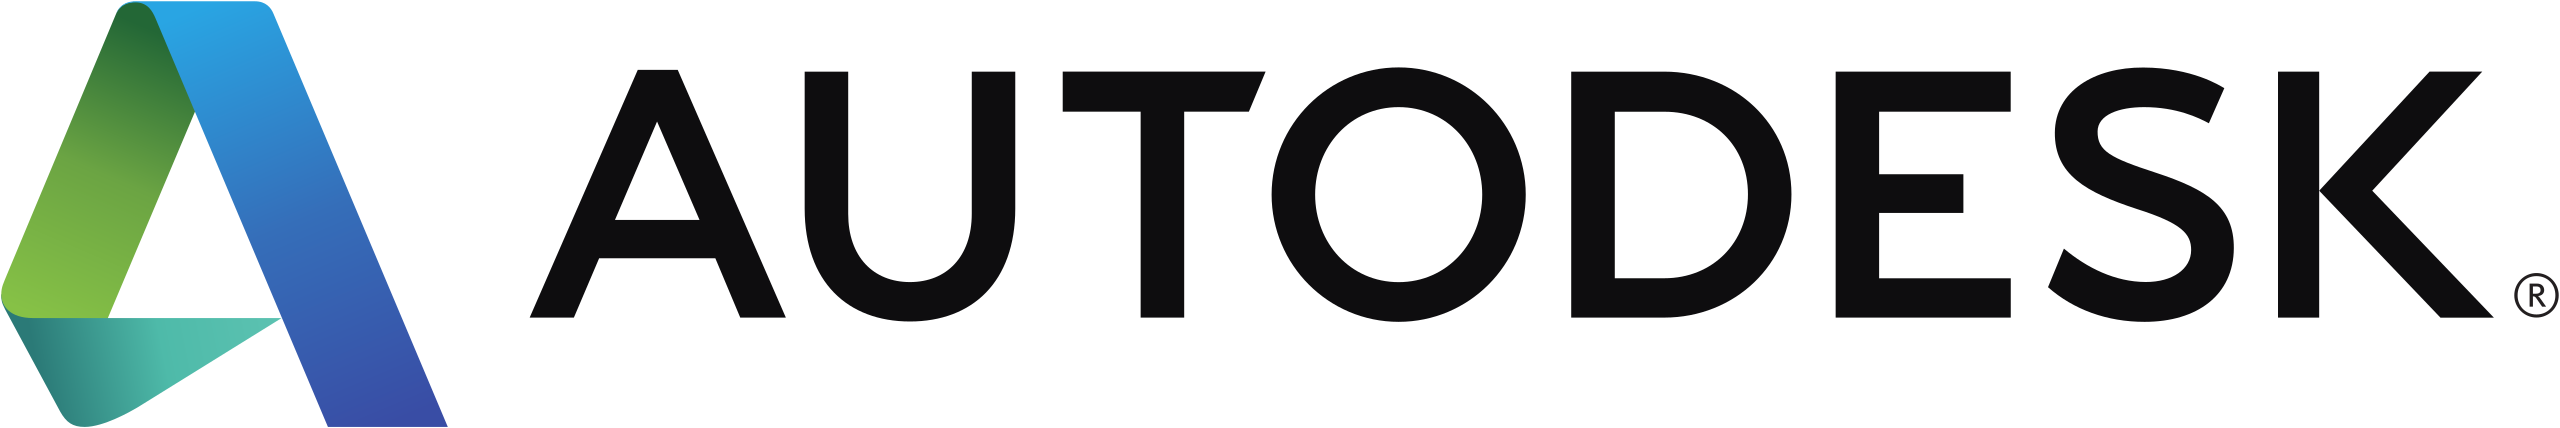 Autodesk_Logo.svg.png